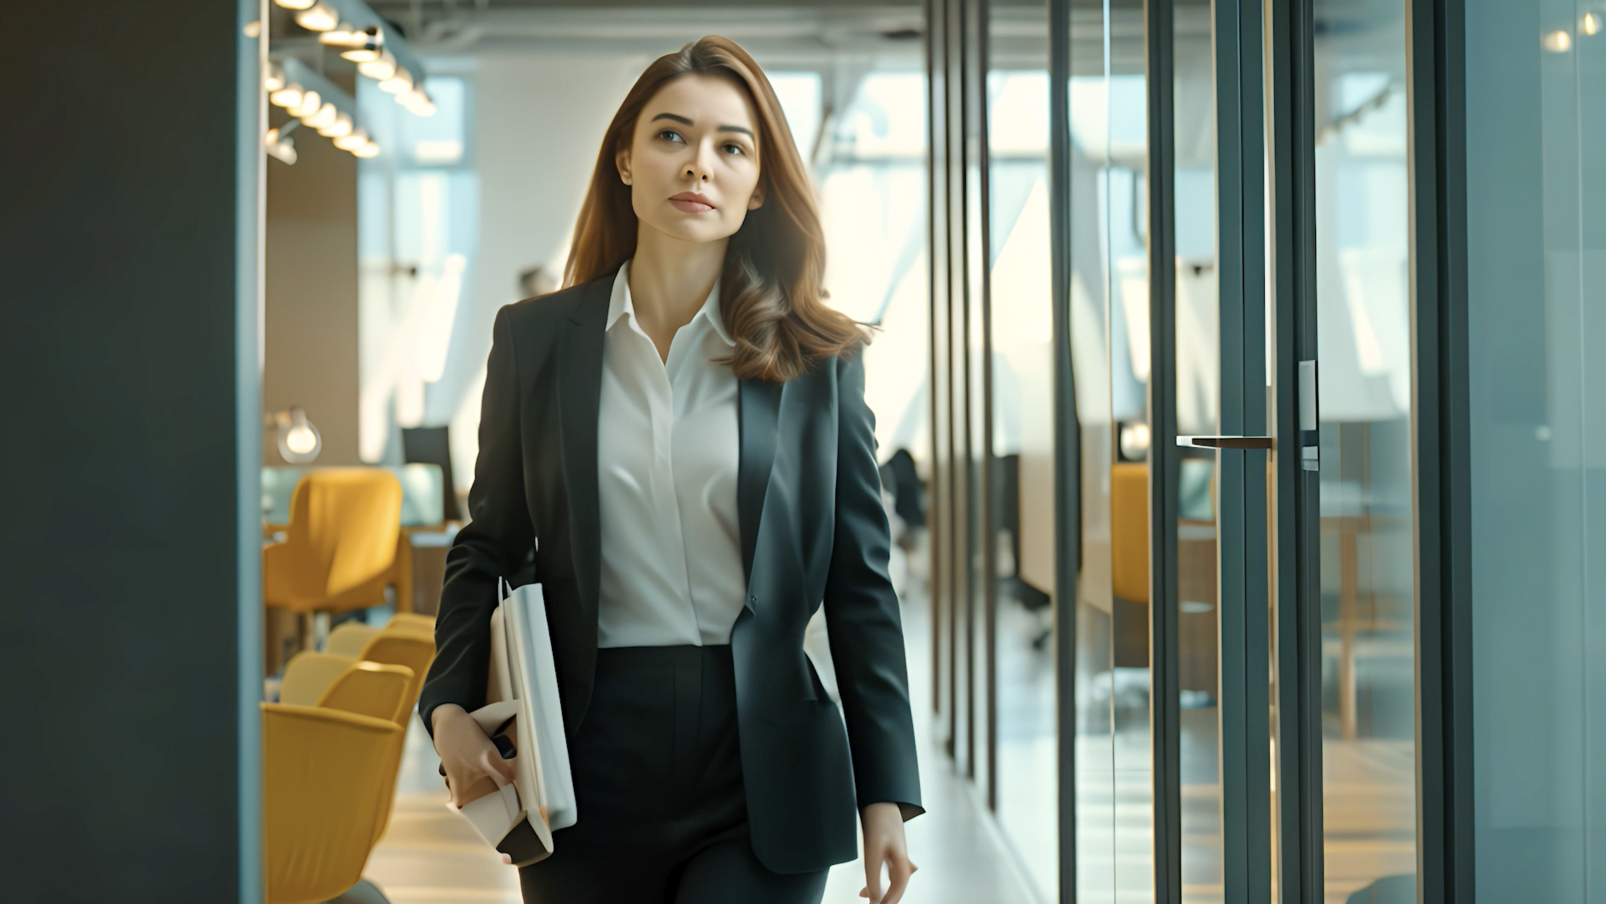 Corporate-woman-in-business-suit-walking-in-office-hallway